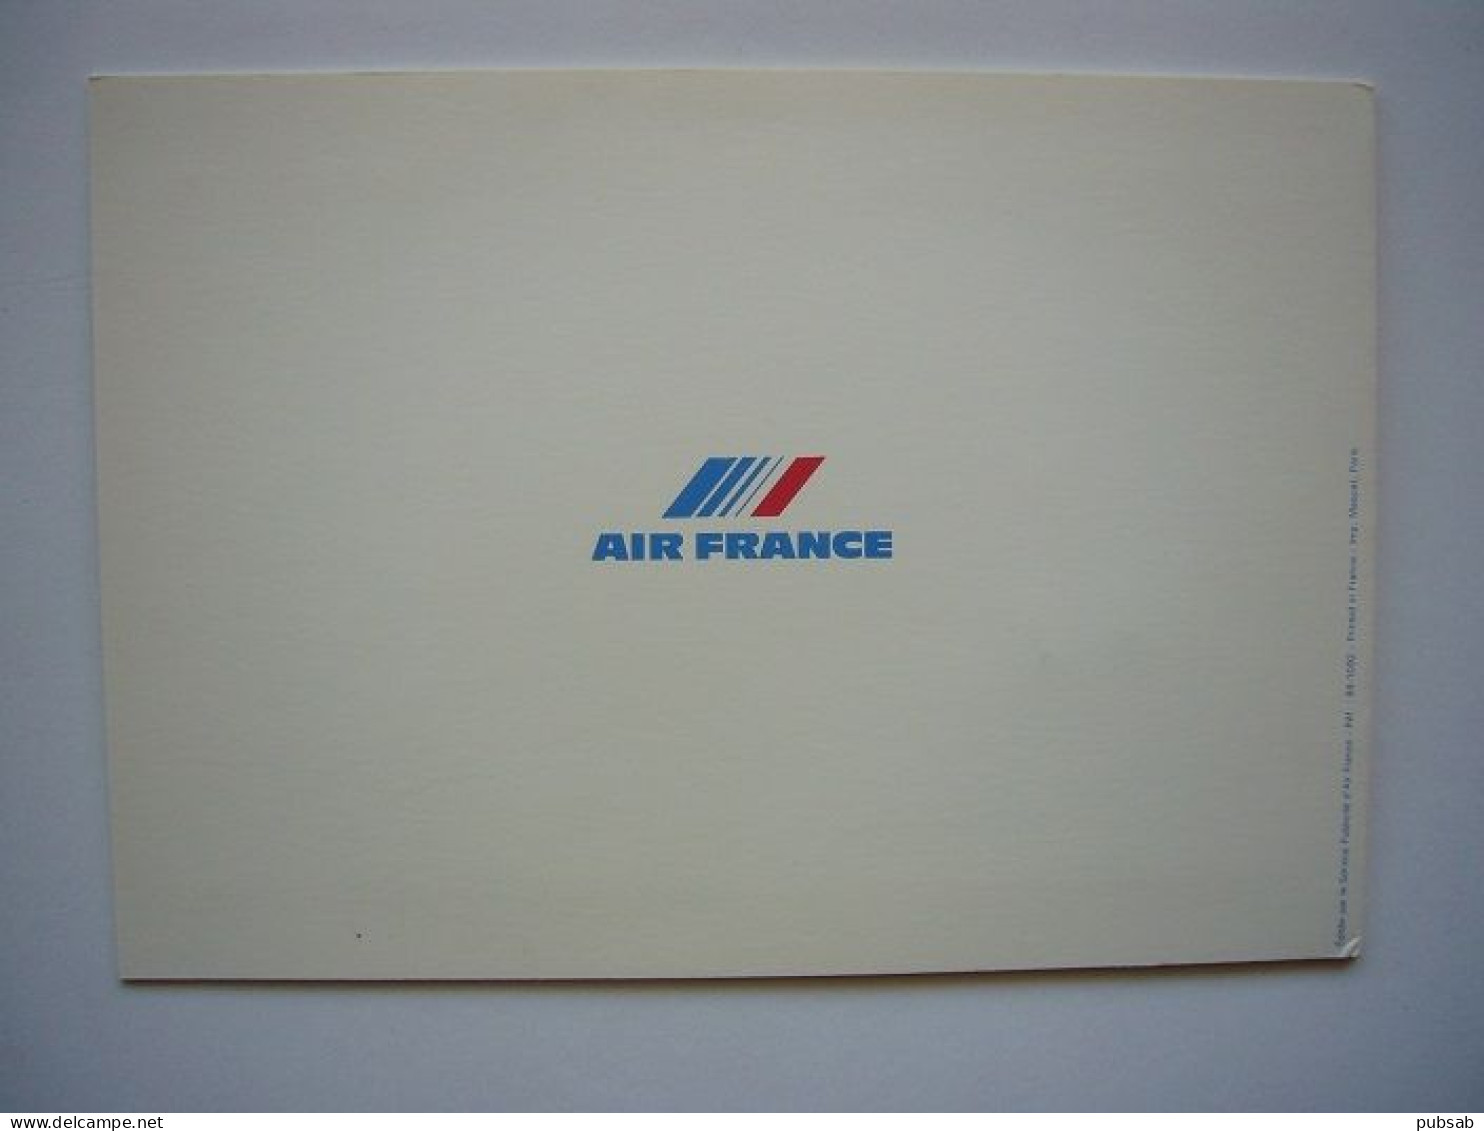 Avion / Airplane / AIR FRANCE / Carte De Voeux / Airline Issue / Size : 11X15,5cm - 1946-....: Modern Era